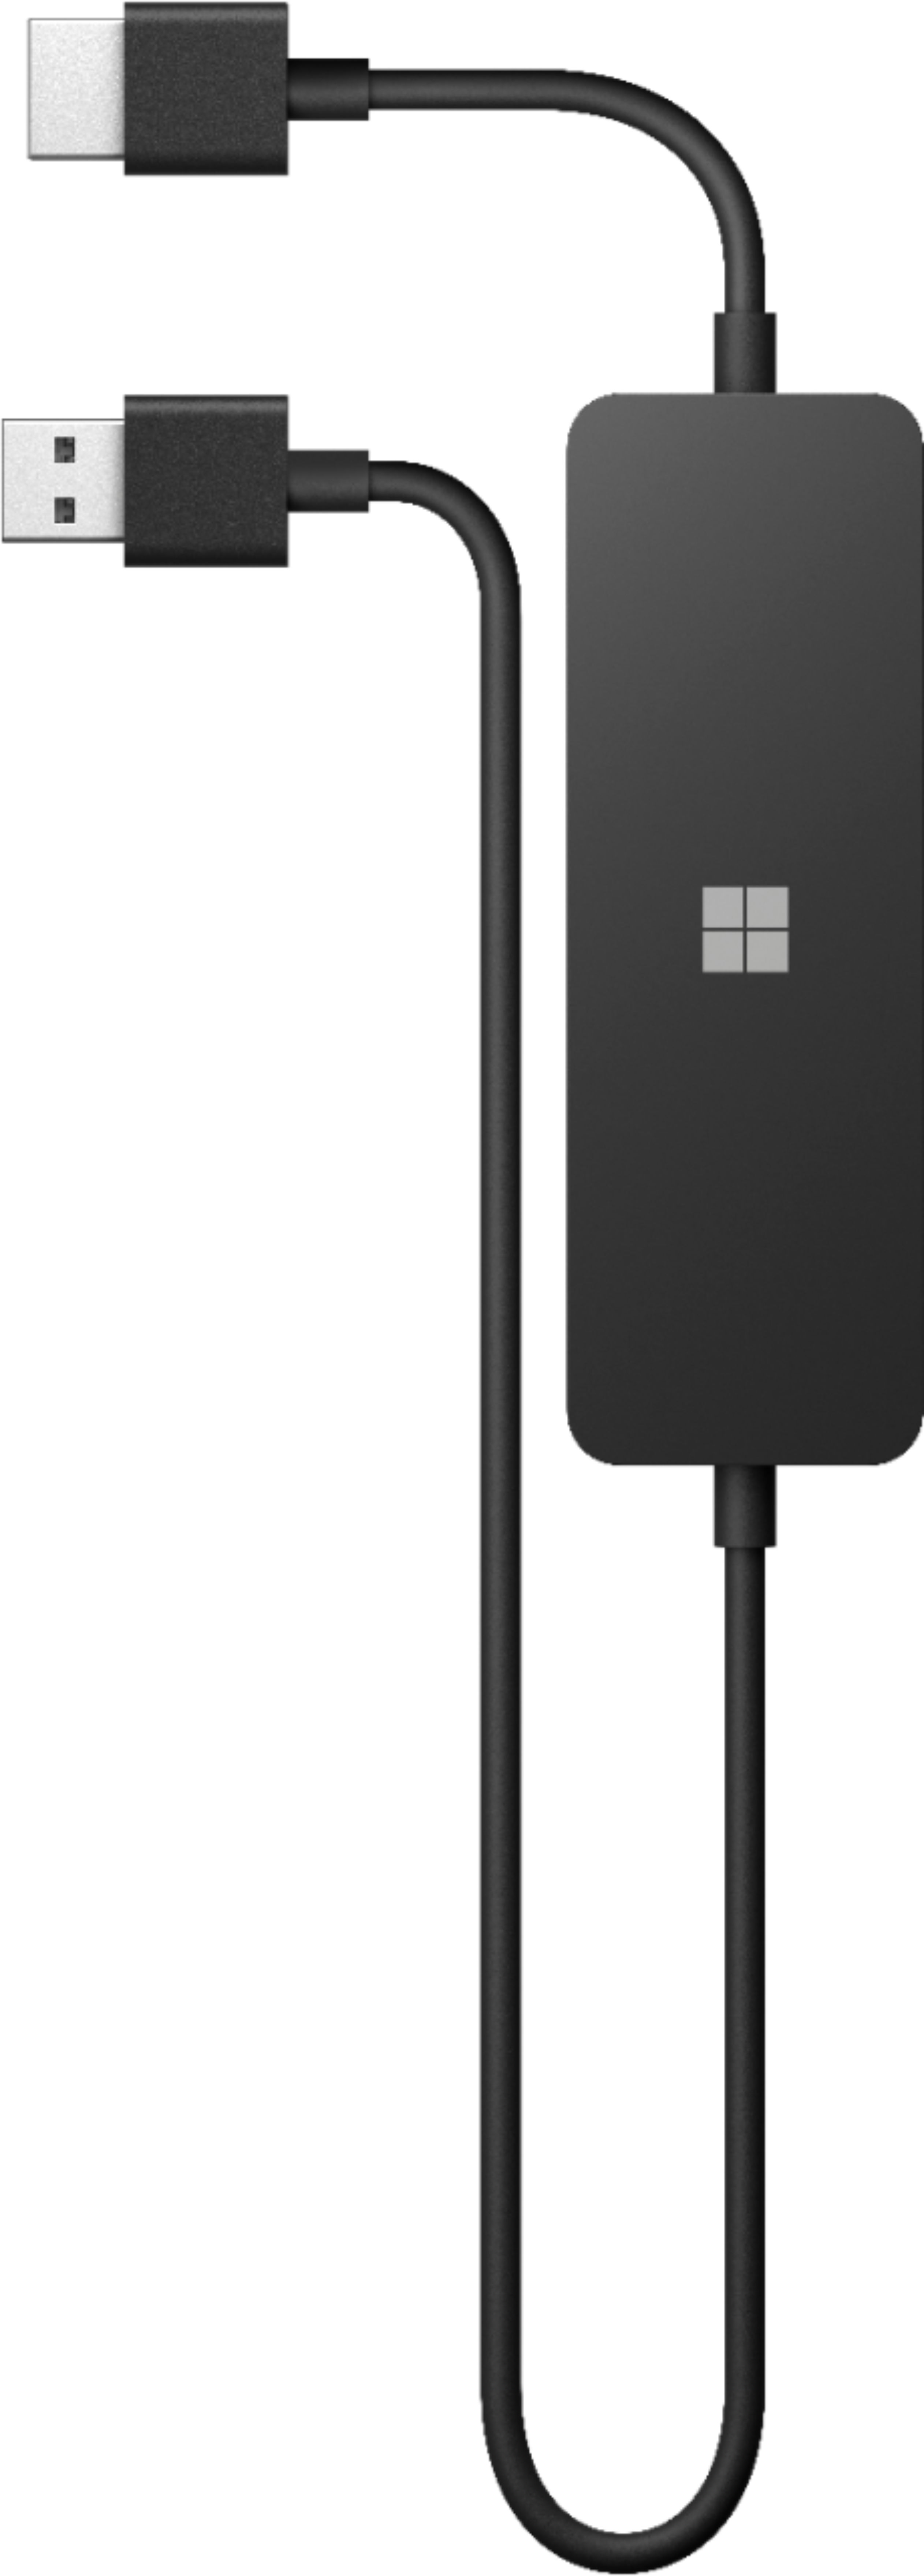 Microsoft 4K Wireless Display Adapter Black UTH-00001 - Best Buy